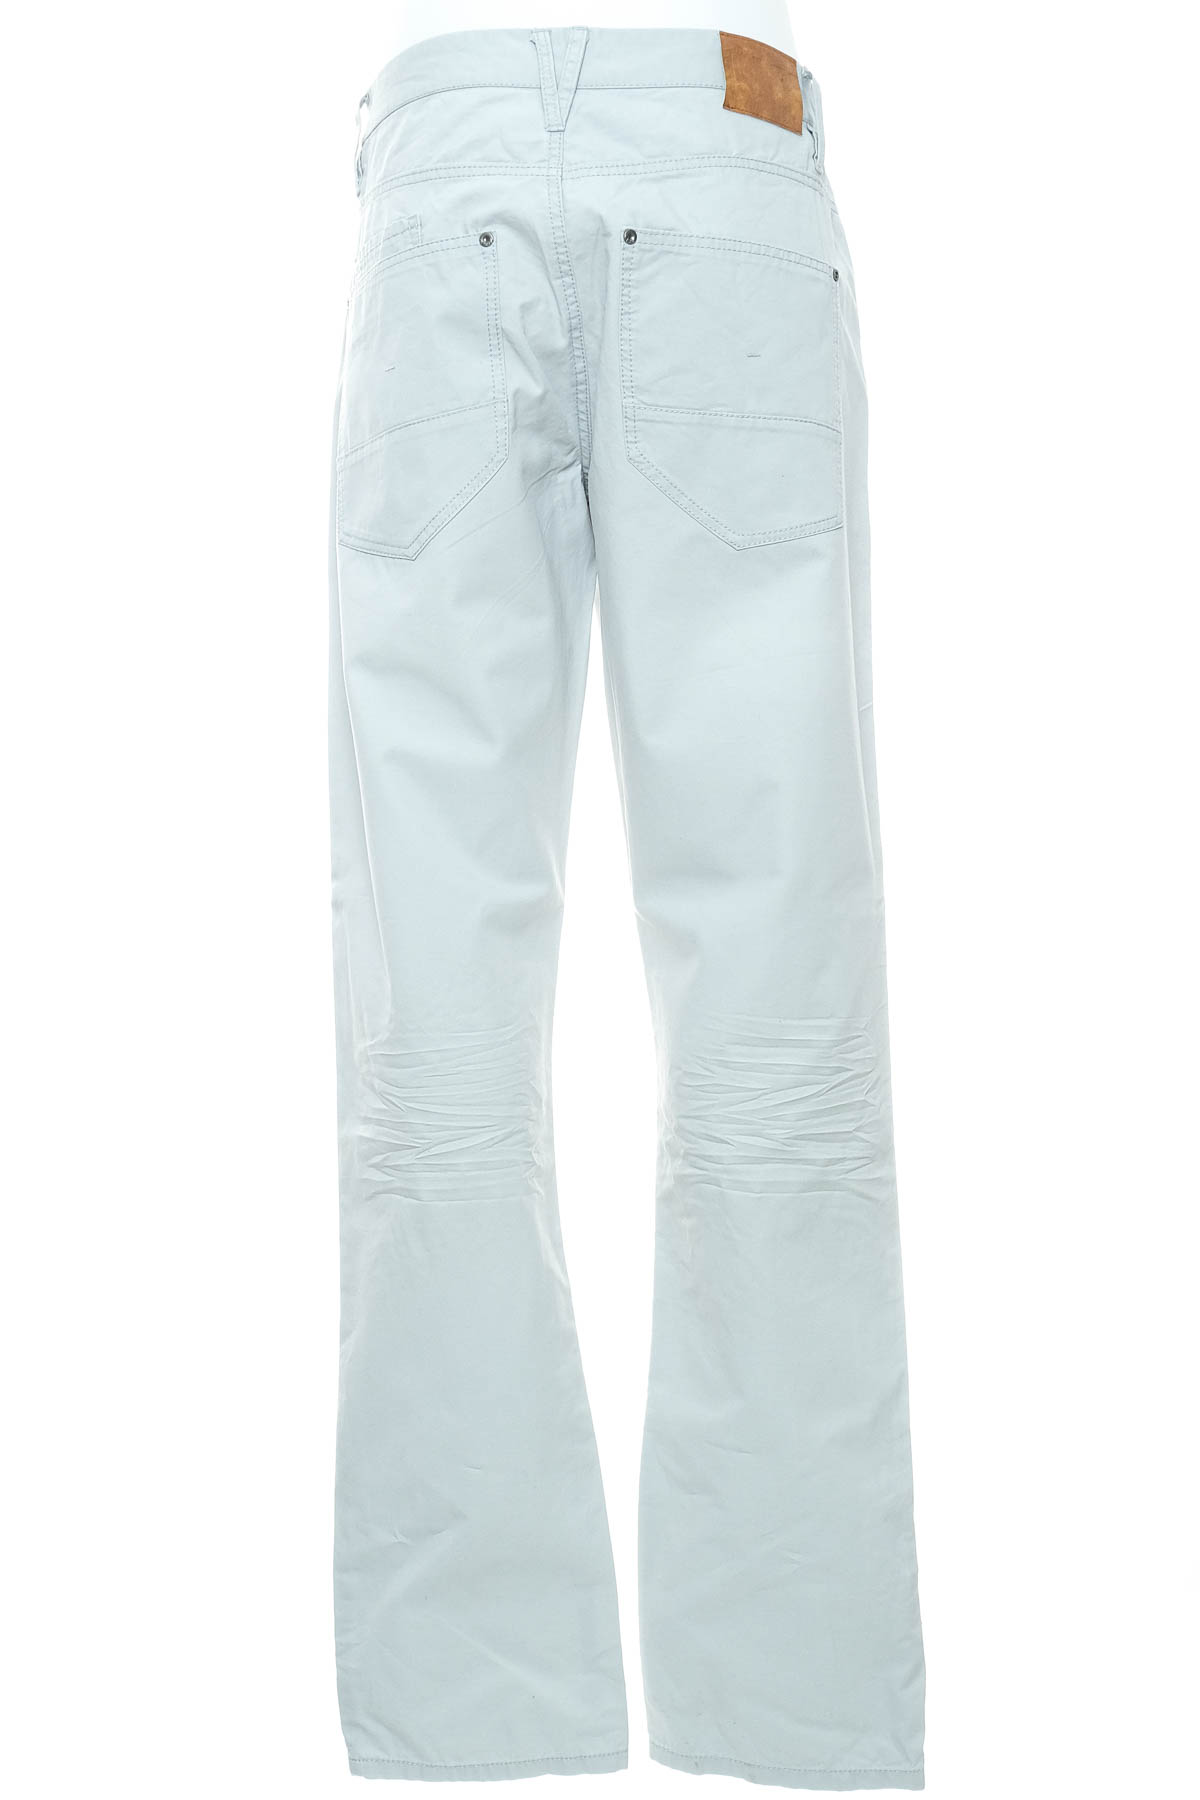 Men's trousers - JBC - 1